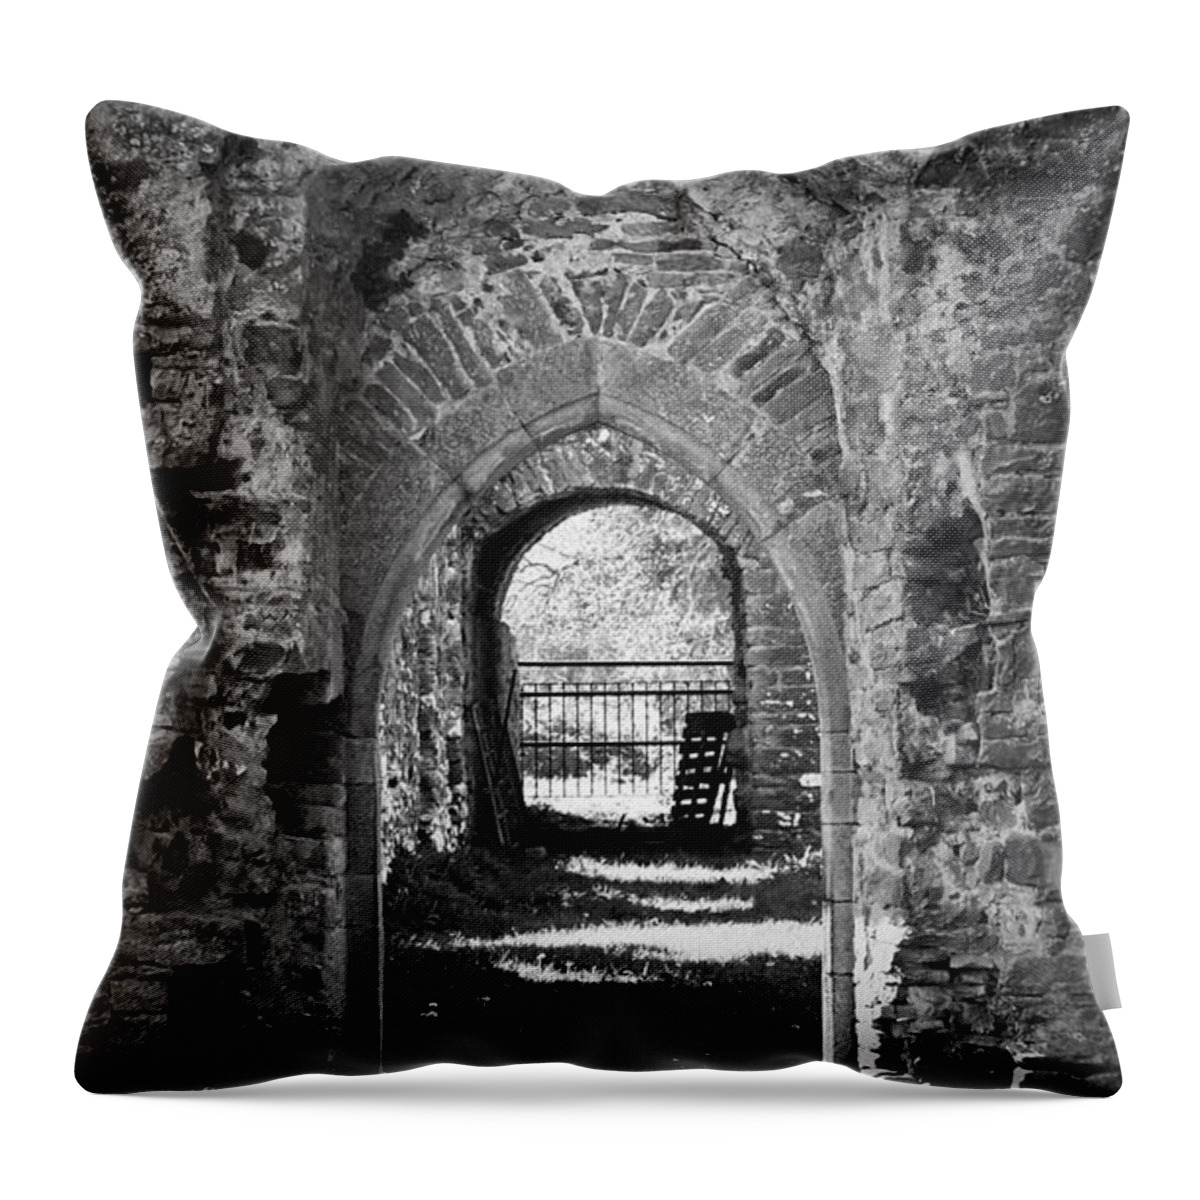 Irish Throw Pillow featuring the photograph Doors at Ballybeg Priory in Buttevant Ireland by Teresa Mucha